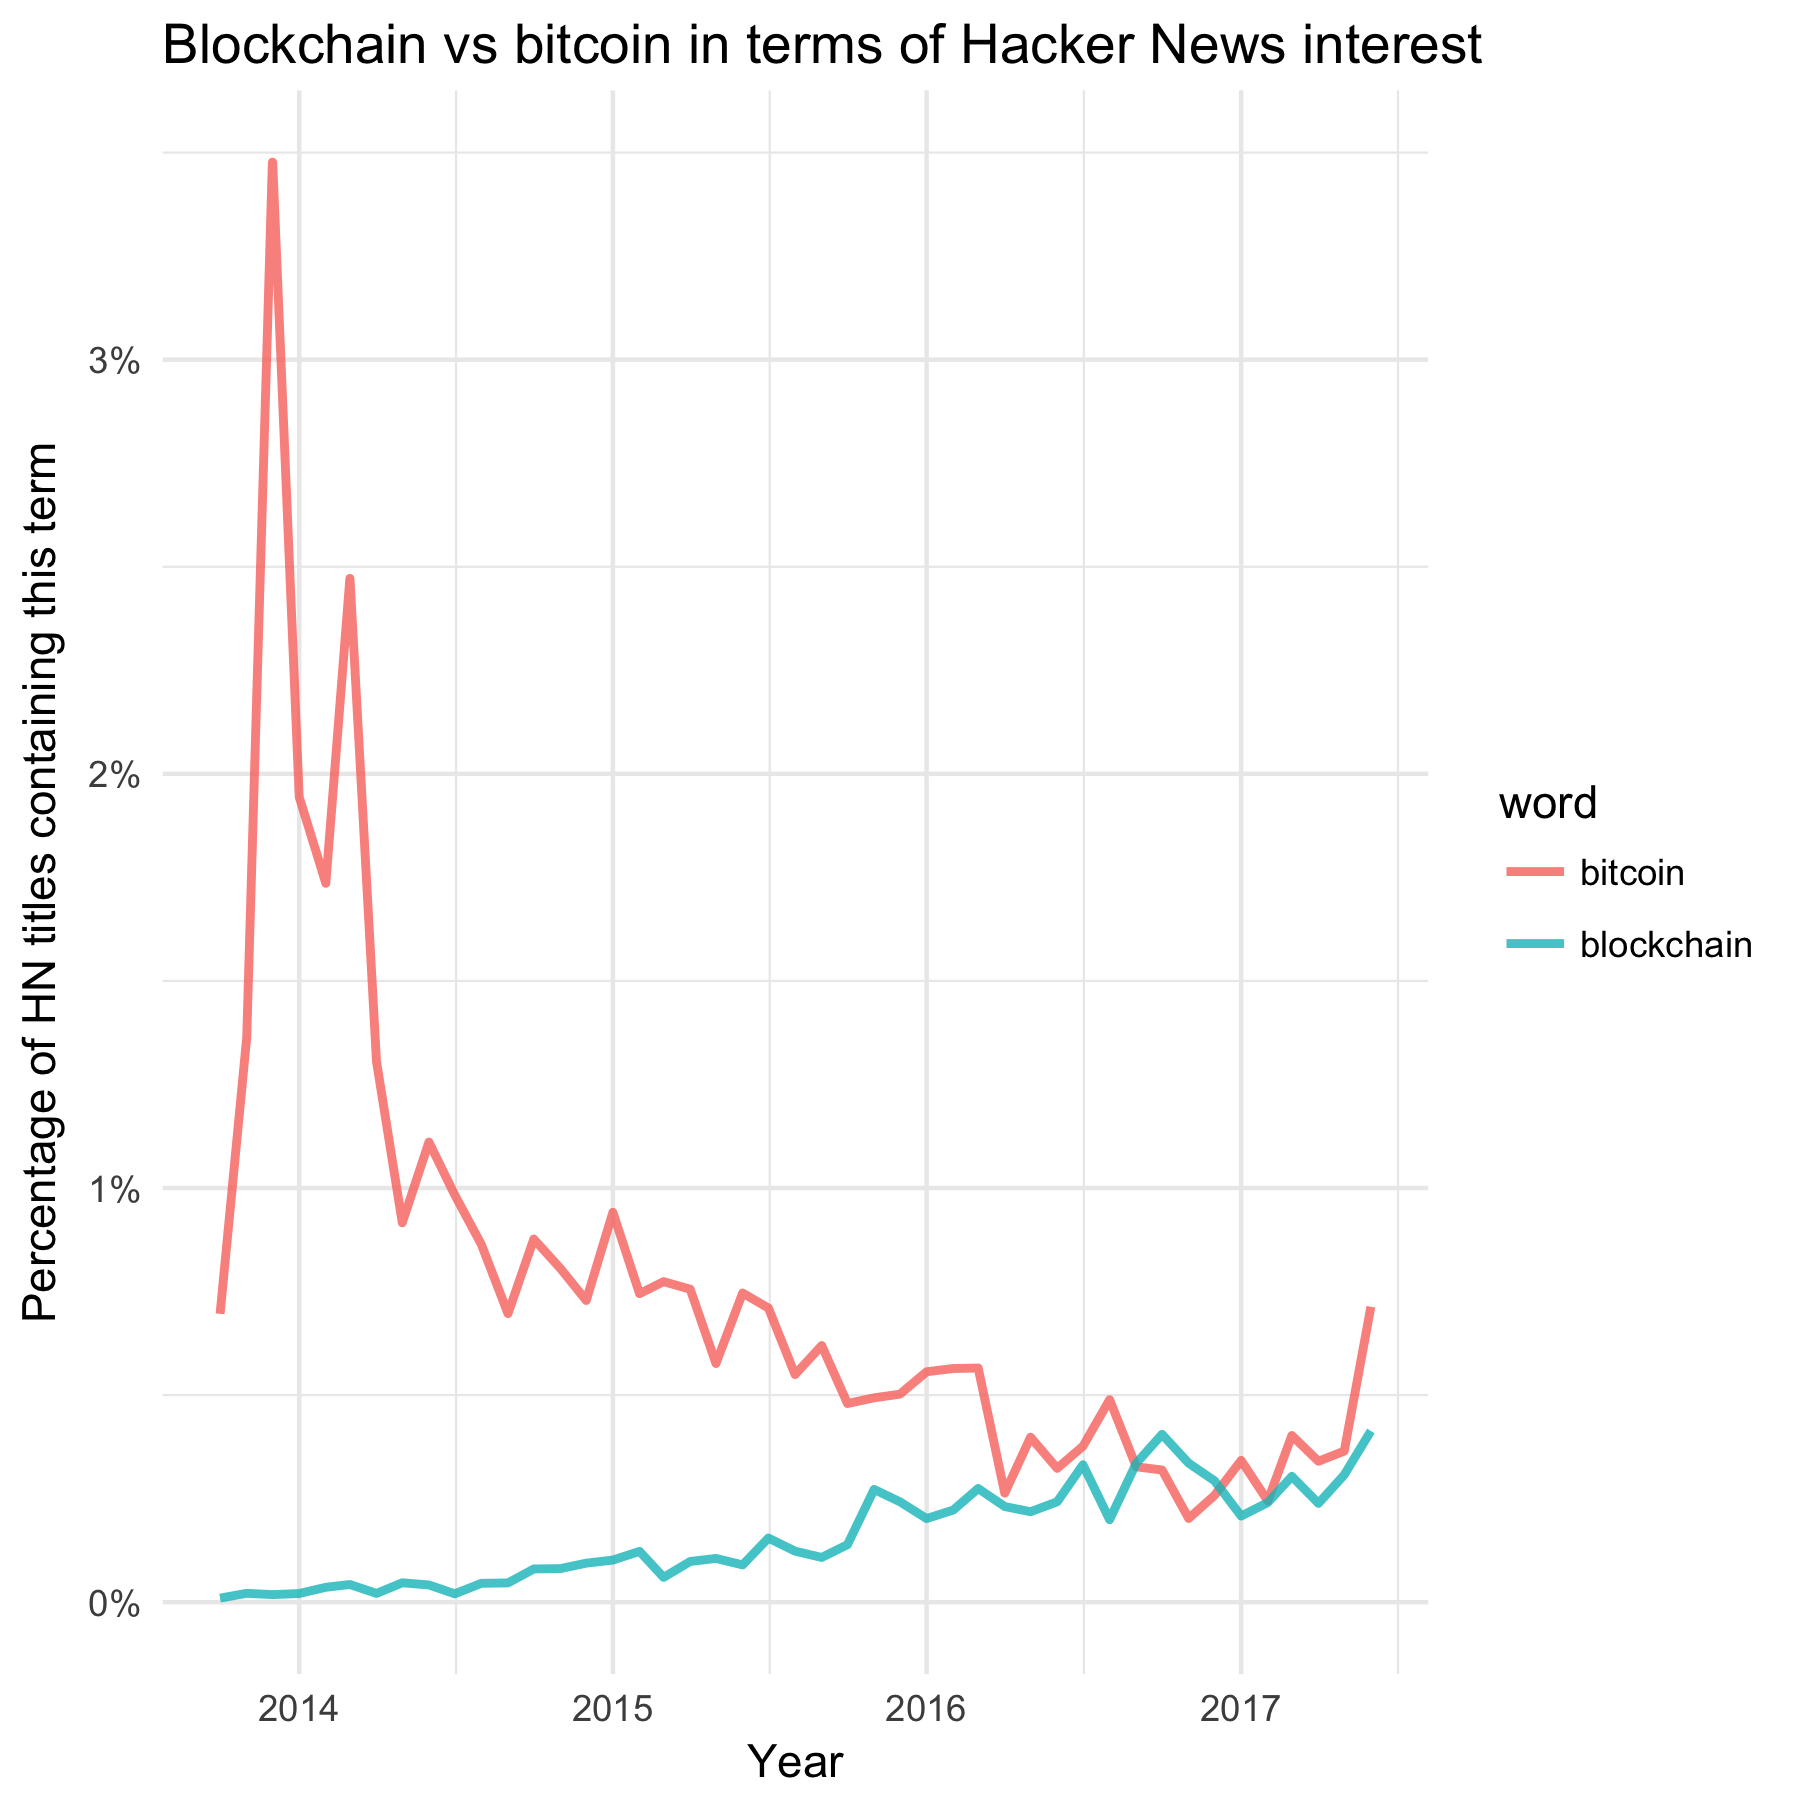 The popularity of Blockchain vs. Bitcoin on Hacker News